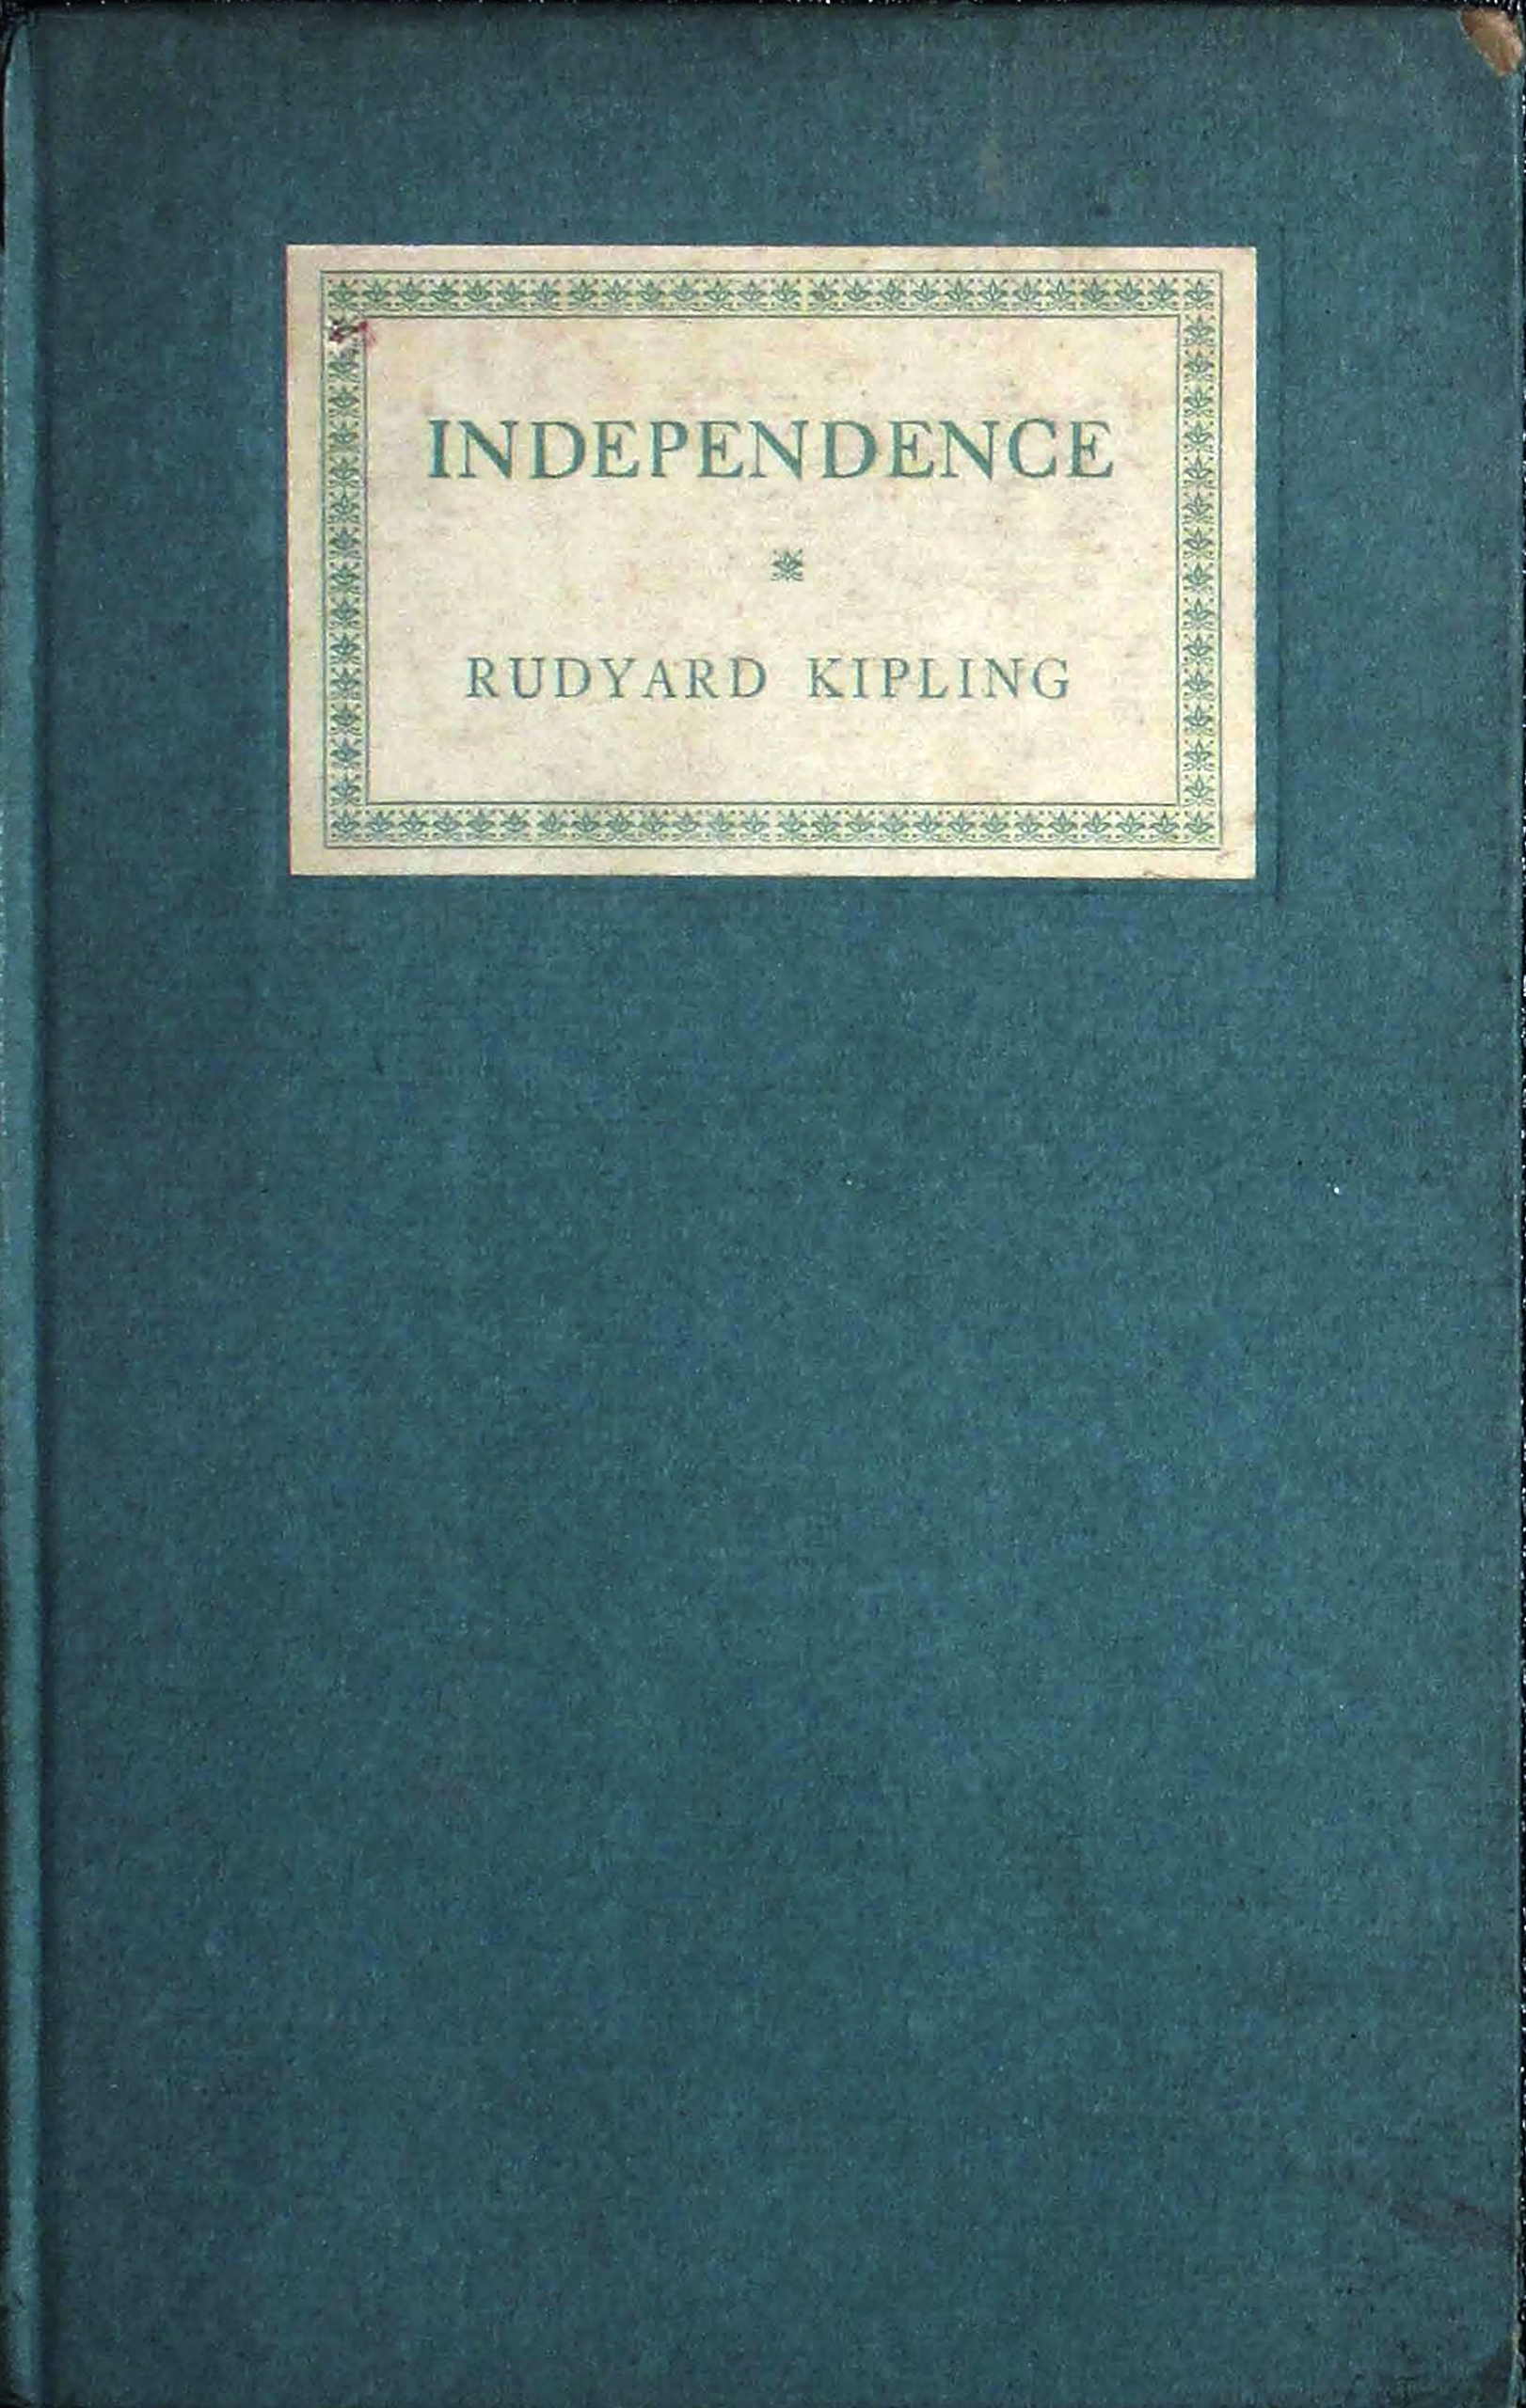 Independence: Rectorial address delivered at St. Andrews October 10, 1923